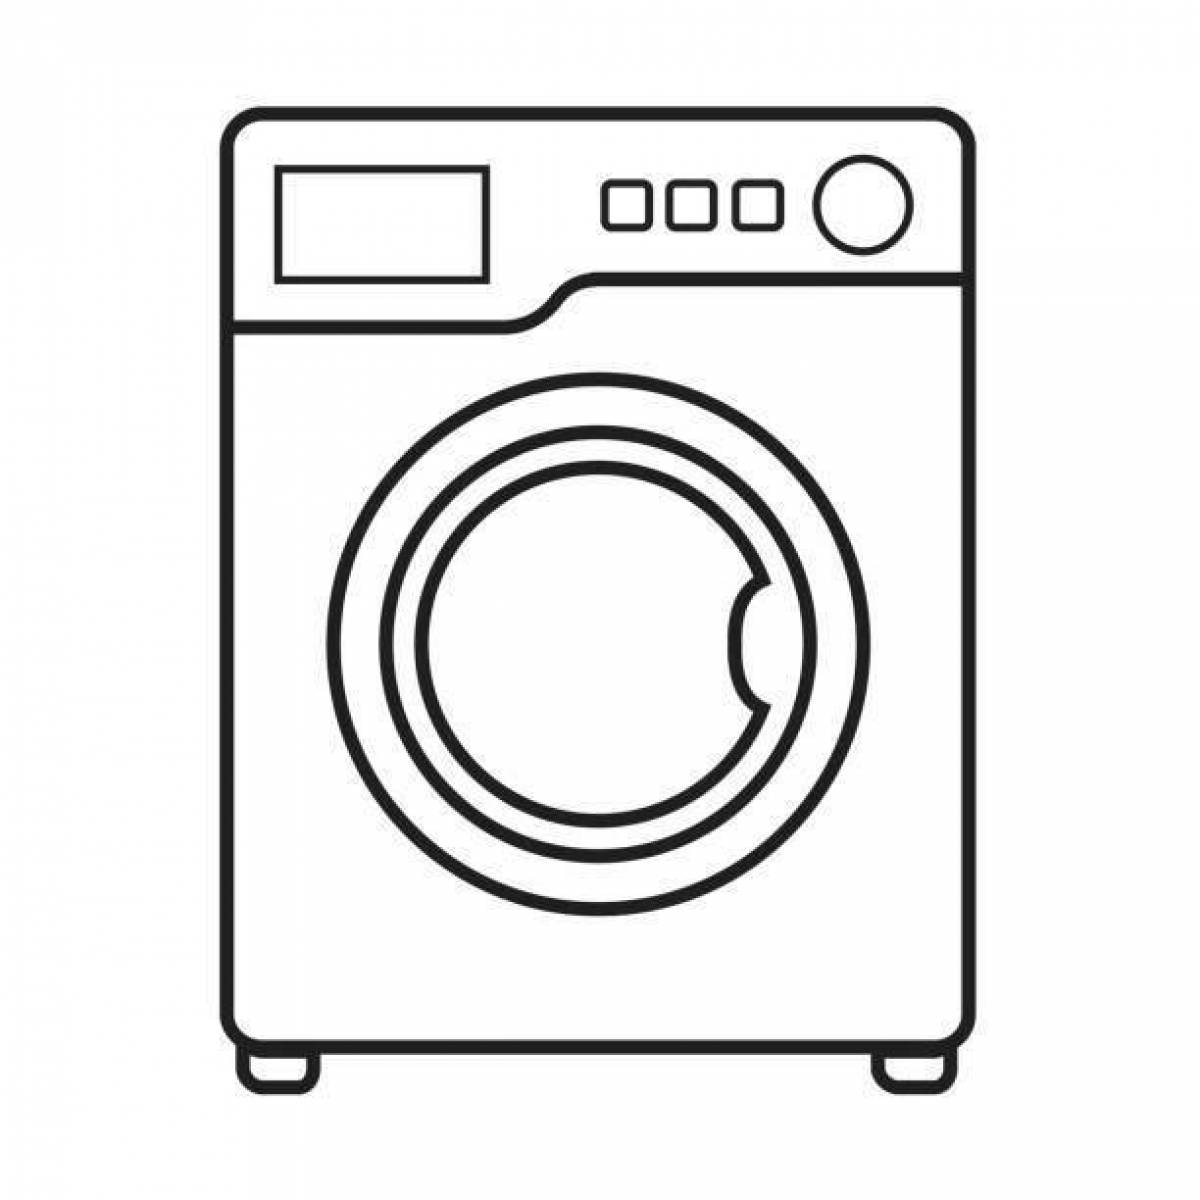 Coloring page charming washing machine